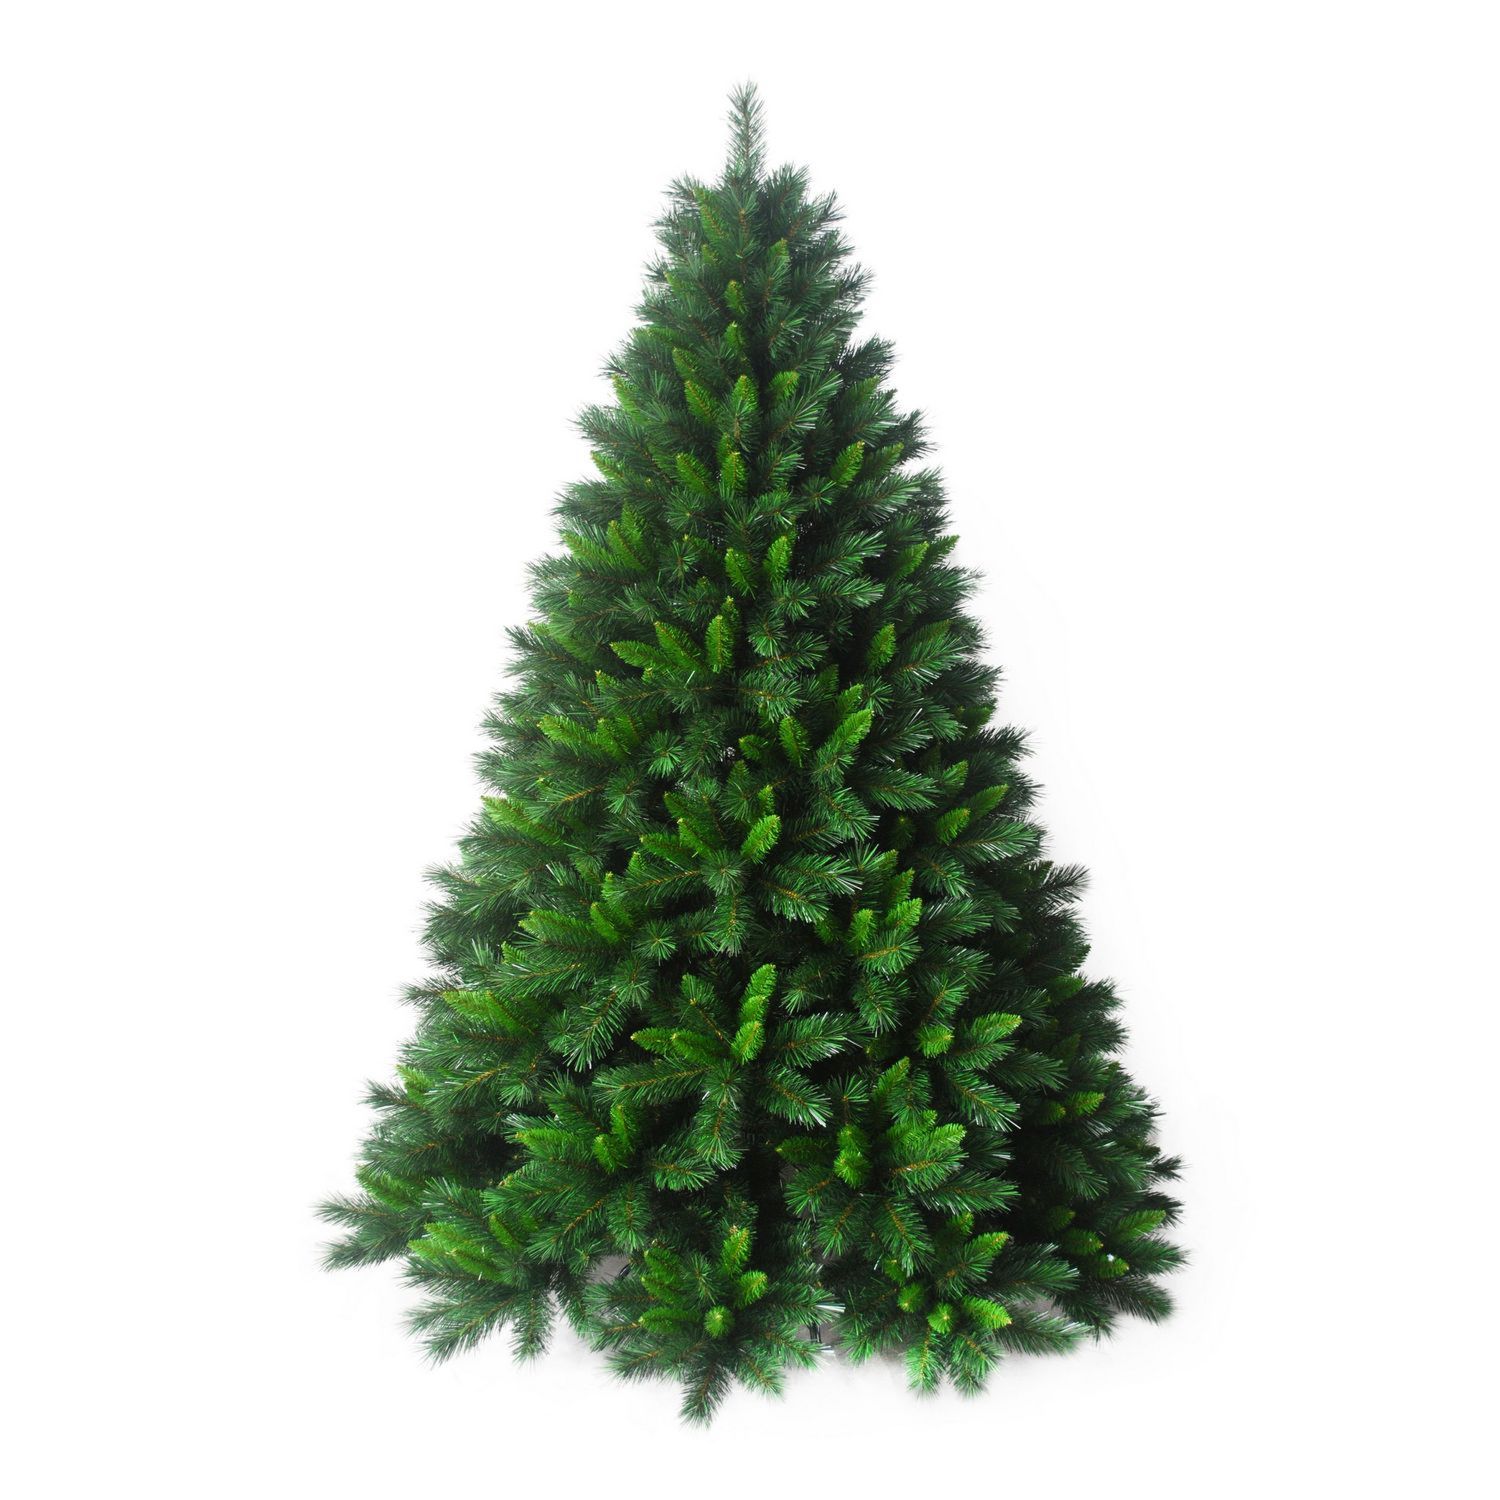 Newport Christmas Tree - Green / 7ft Image